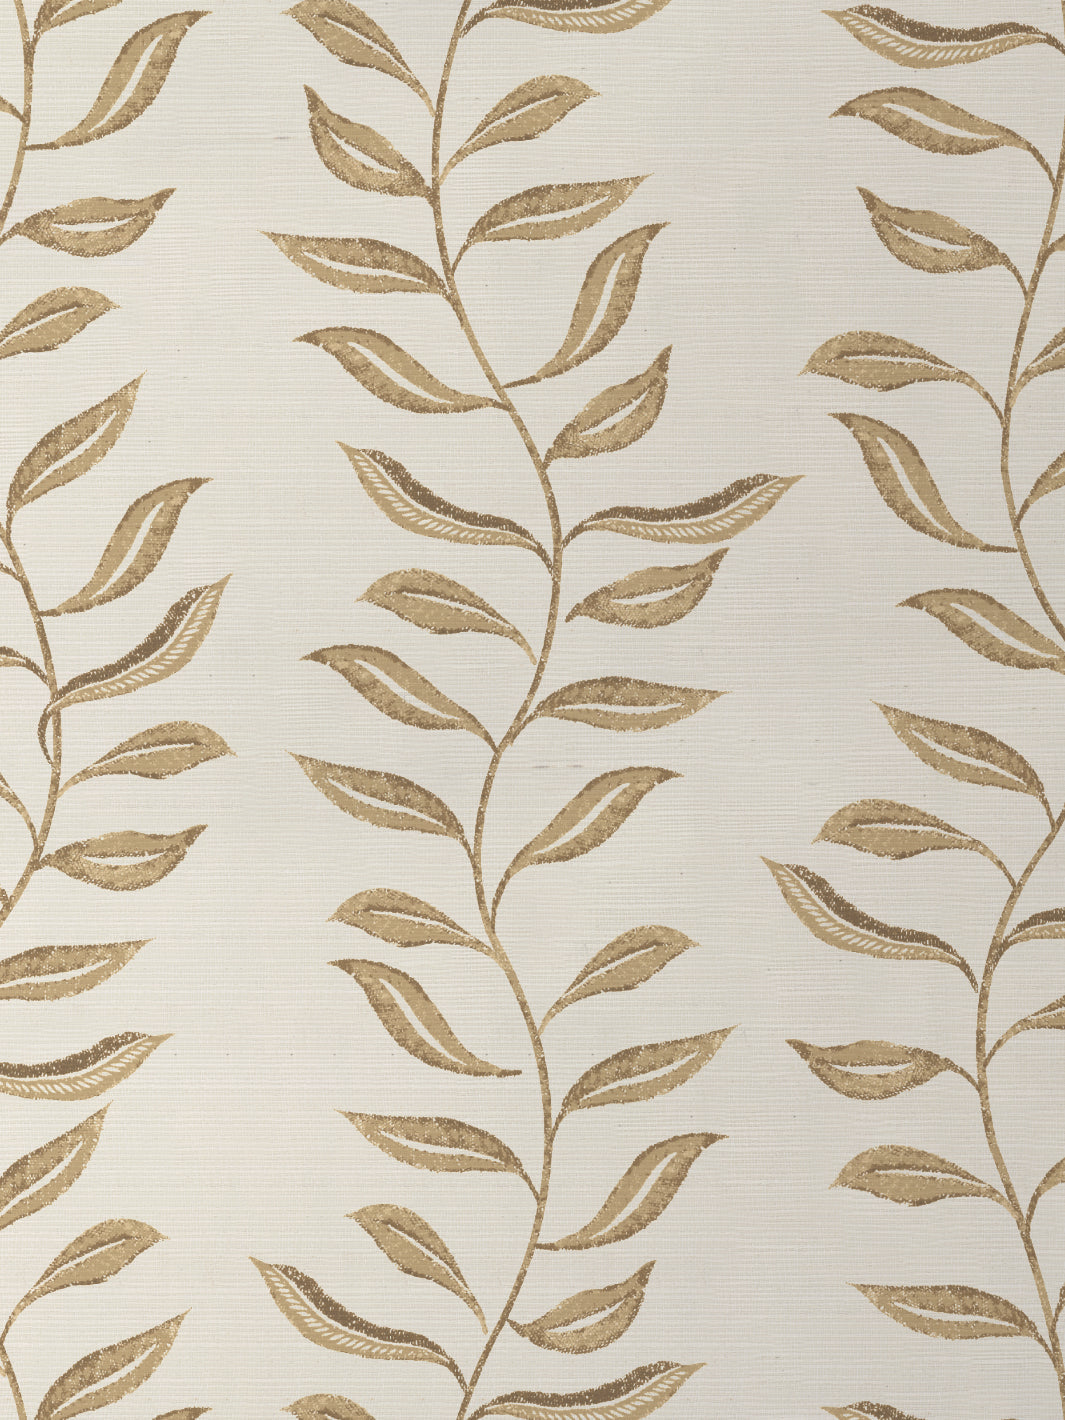 'Seneca' Grasscloth Wallpaper by Nathan Turner - Gold